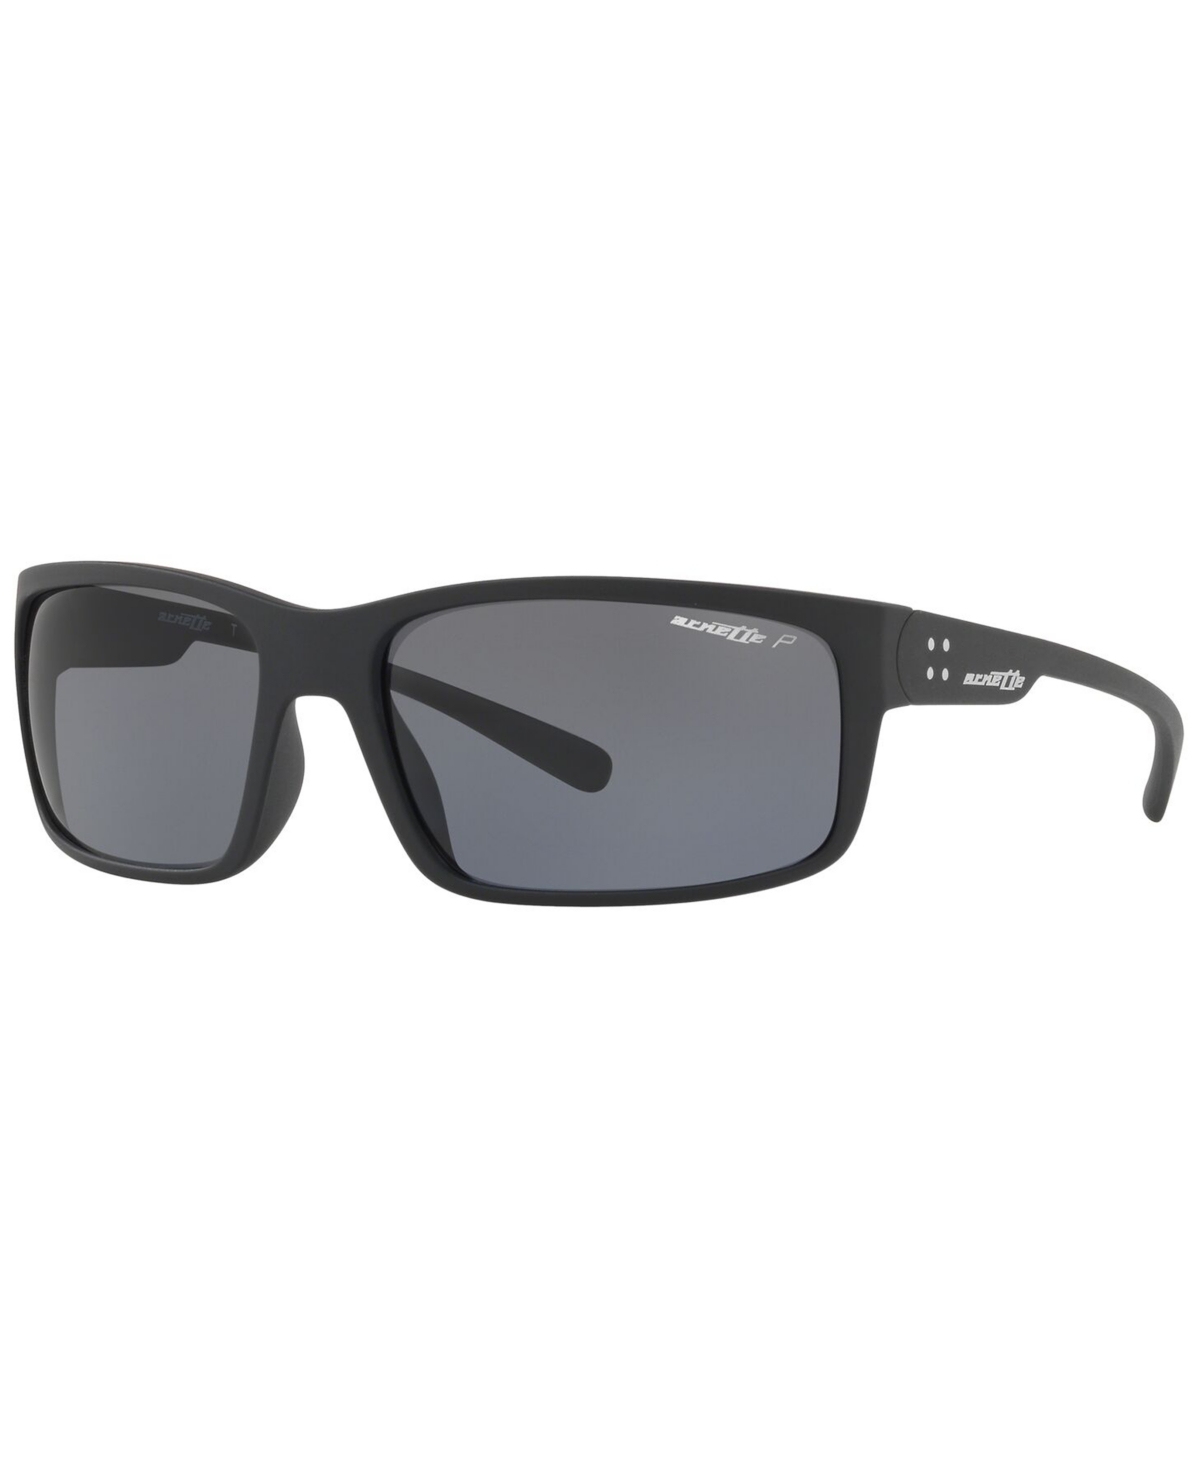 Men's Polarized Sunglasses - MATTE BLACK/POLAR GREY